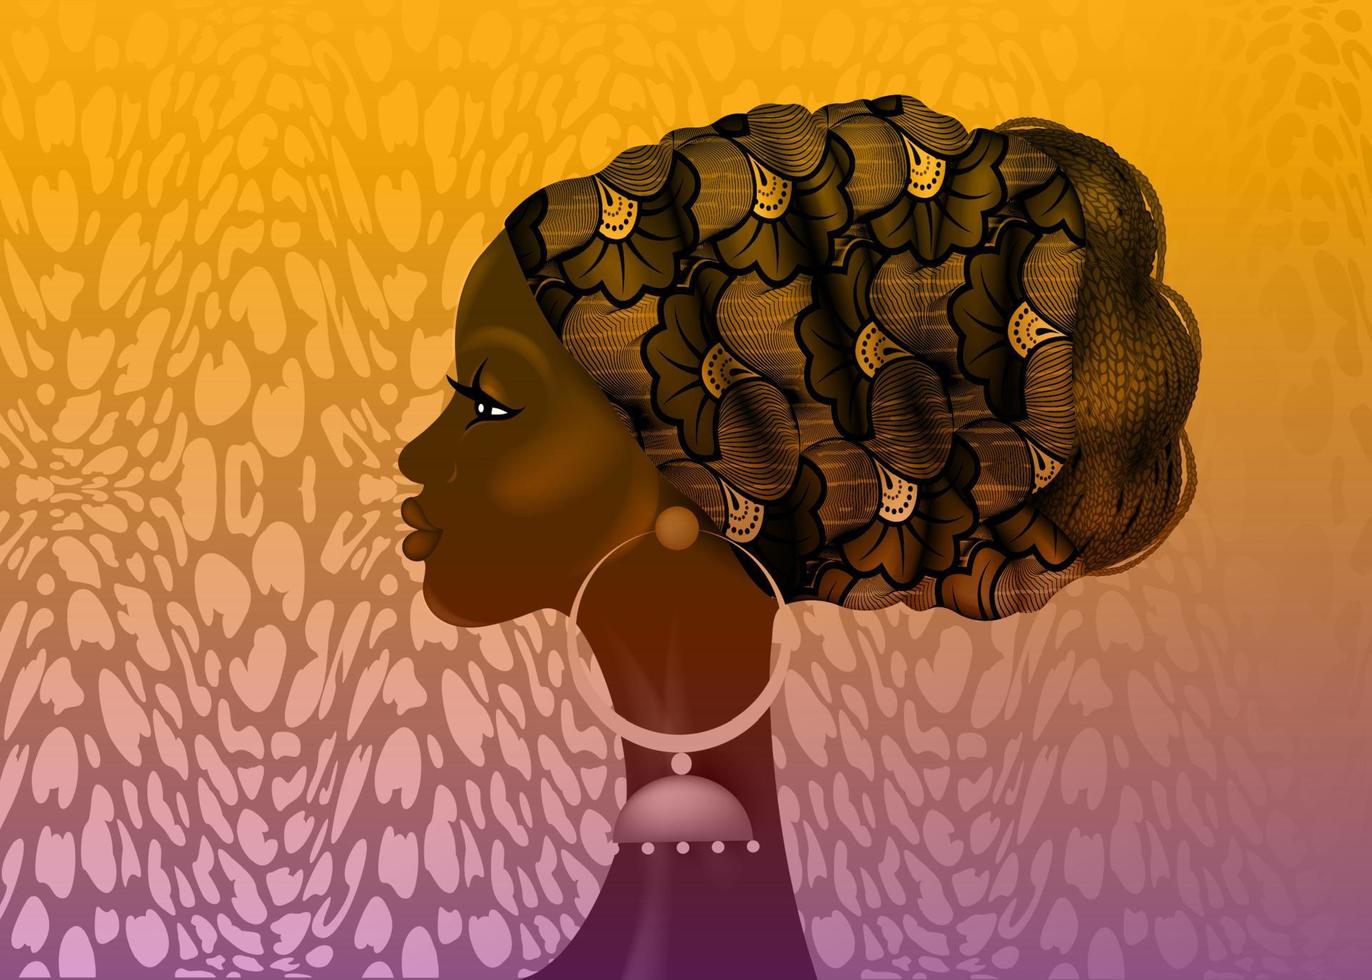 Peinado afro, hermoso retrato de mujer africana en turbante de tela con estampado de cera, concepto de diversidad. Reina negra, corbata étnica para trenzas afro y vector de pelo rizado rizado aislado sobre fondo de colores